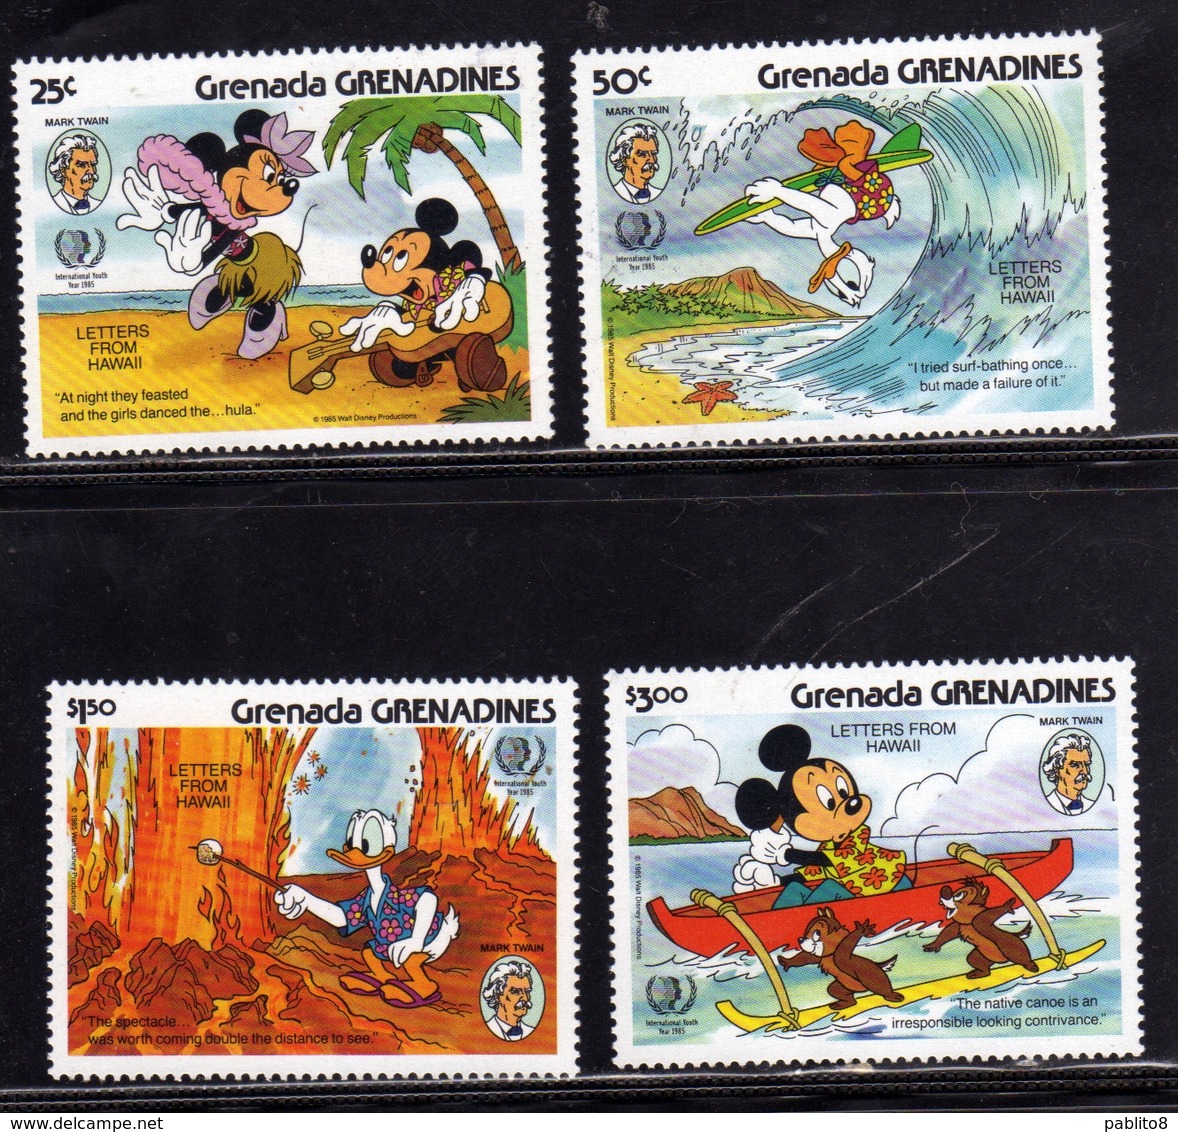 GRENADA GRENADINES 1985 WALT DISNEY MICKEY MOUSE TOPOLINO LETTER FROM HAWAII COMPLETE SET SERIE COMPLETA MNH - Grenada (1974-...)